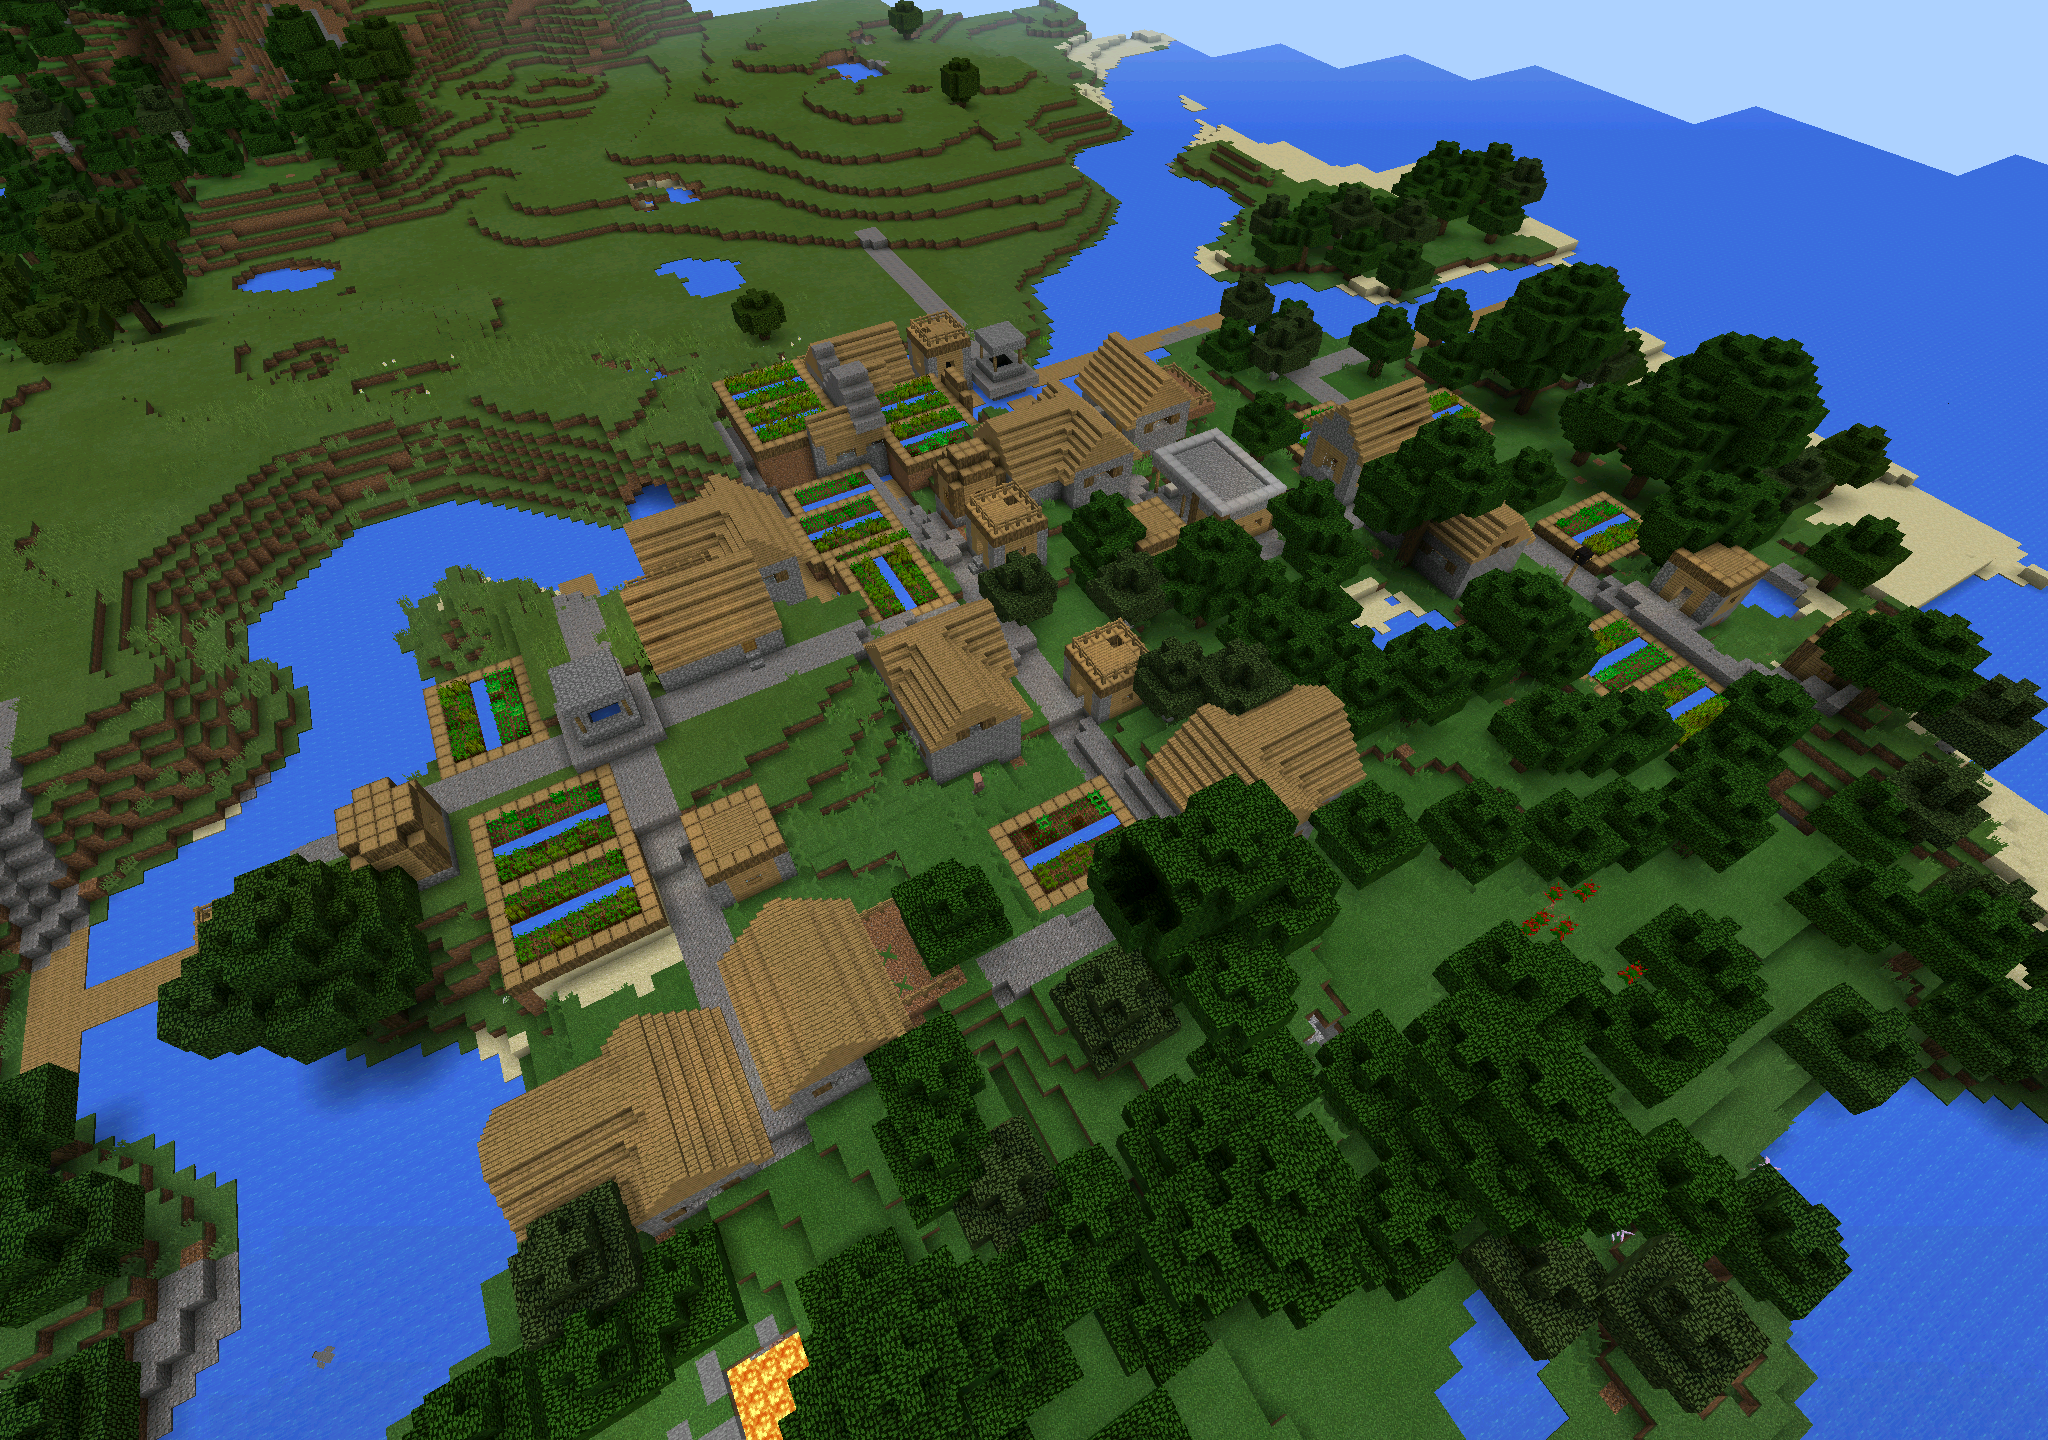 Minecraft pe village. СИД большая деревня 1.22.6.5. Майнкрафт 1.11.1 деревня. Майнкрафт деревня 1.0.0. СИД деревни с кузницей 1.17.141.